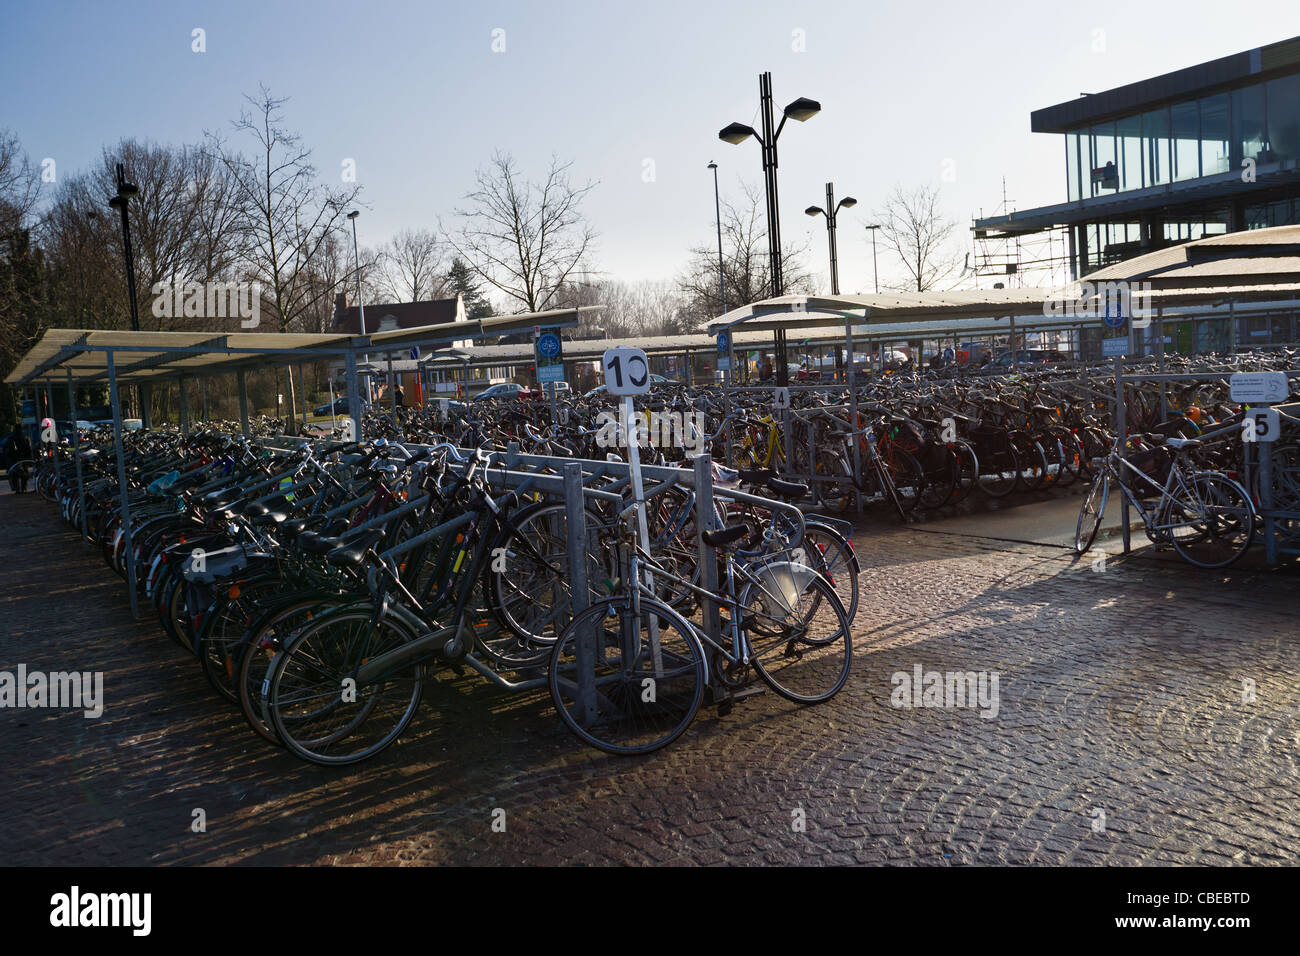 Fahrrad-Parken am Bahnhof von Brügge, Belgien Stockfotografie - Alamy